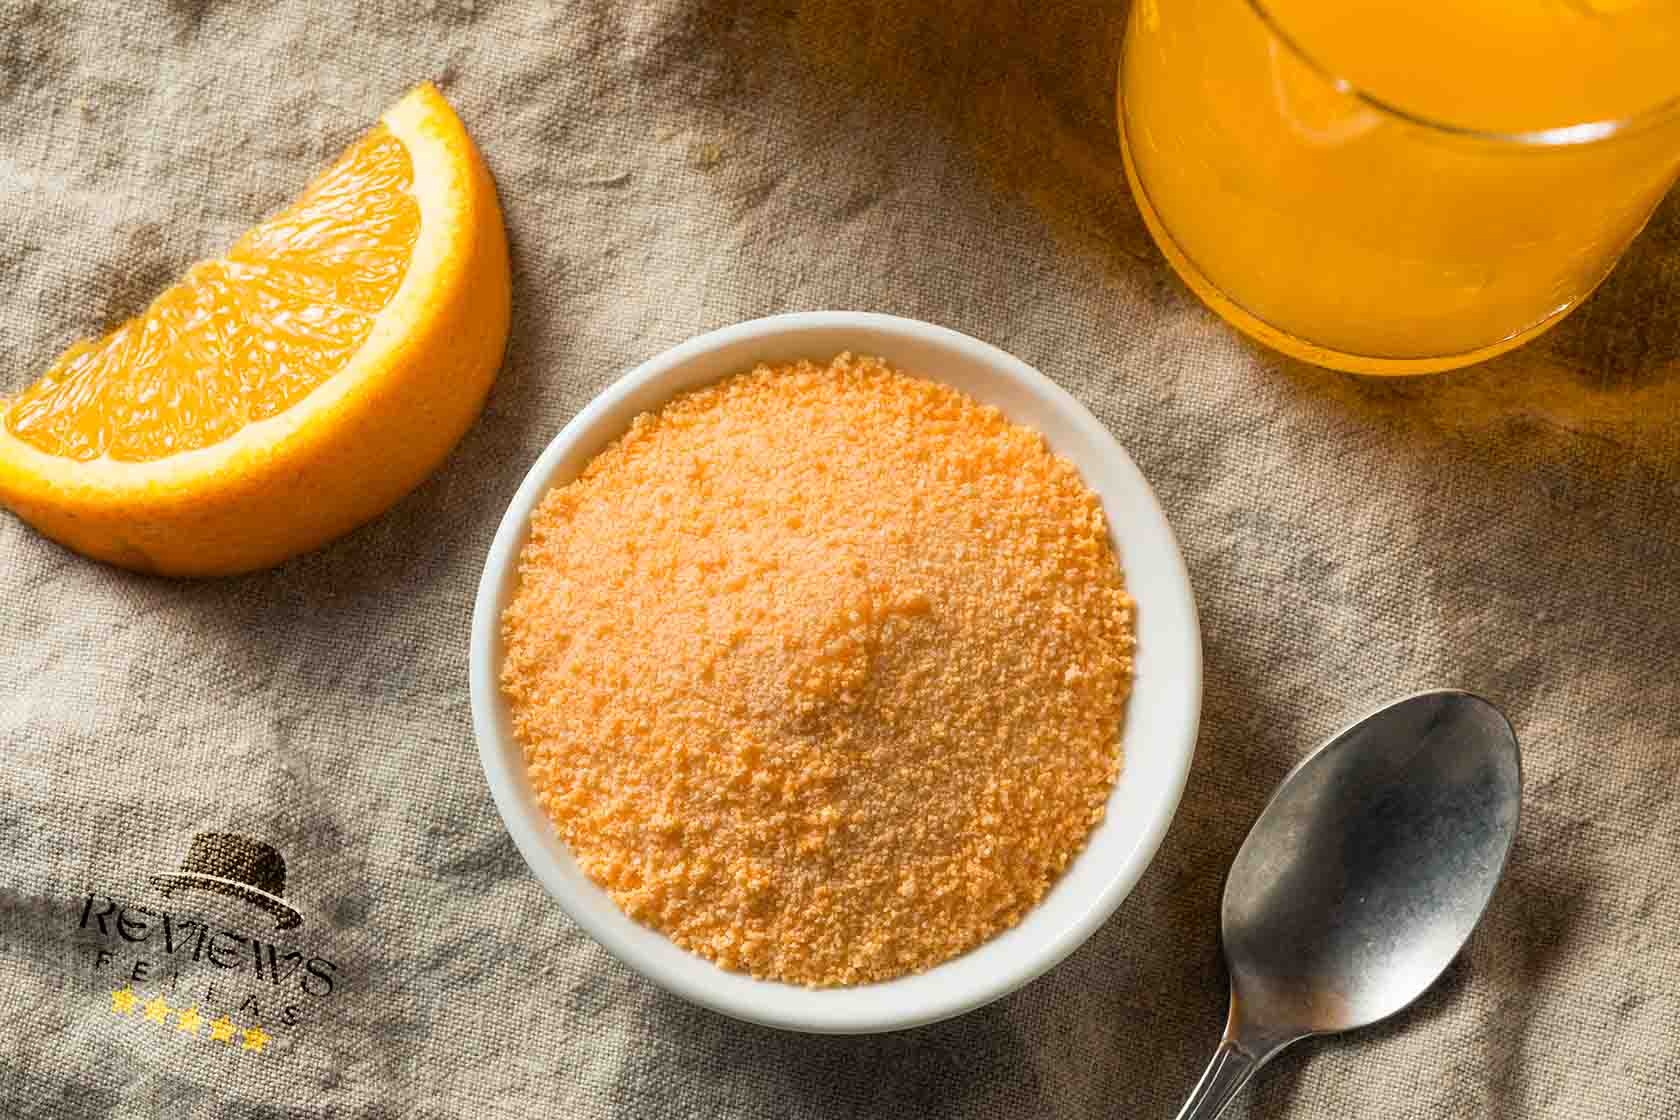 Honest Review of Top 5 Vitamin C Powder of 2023